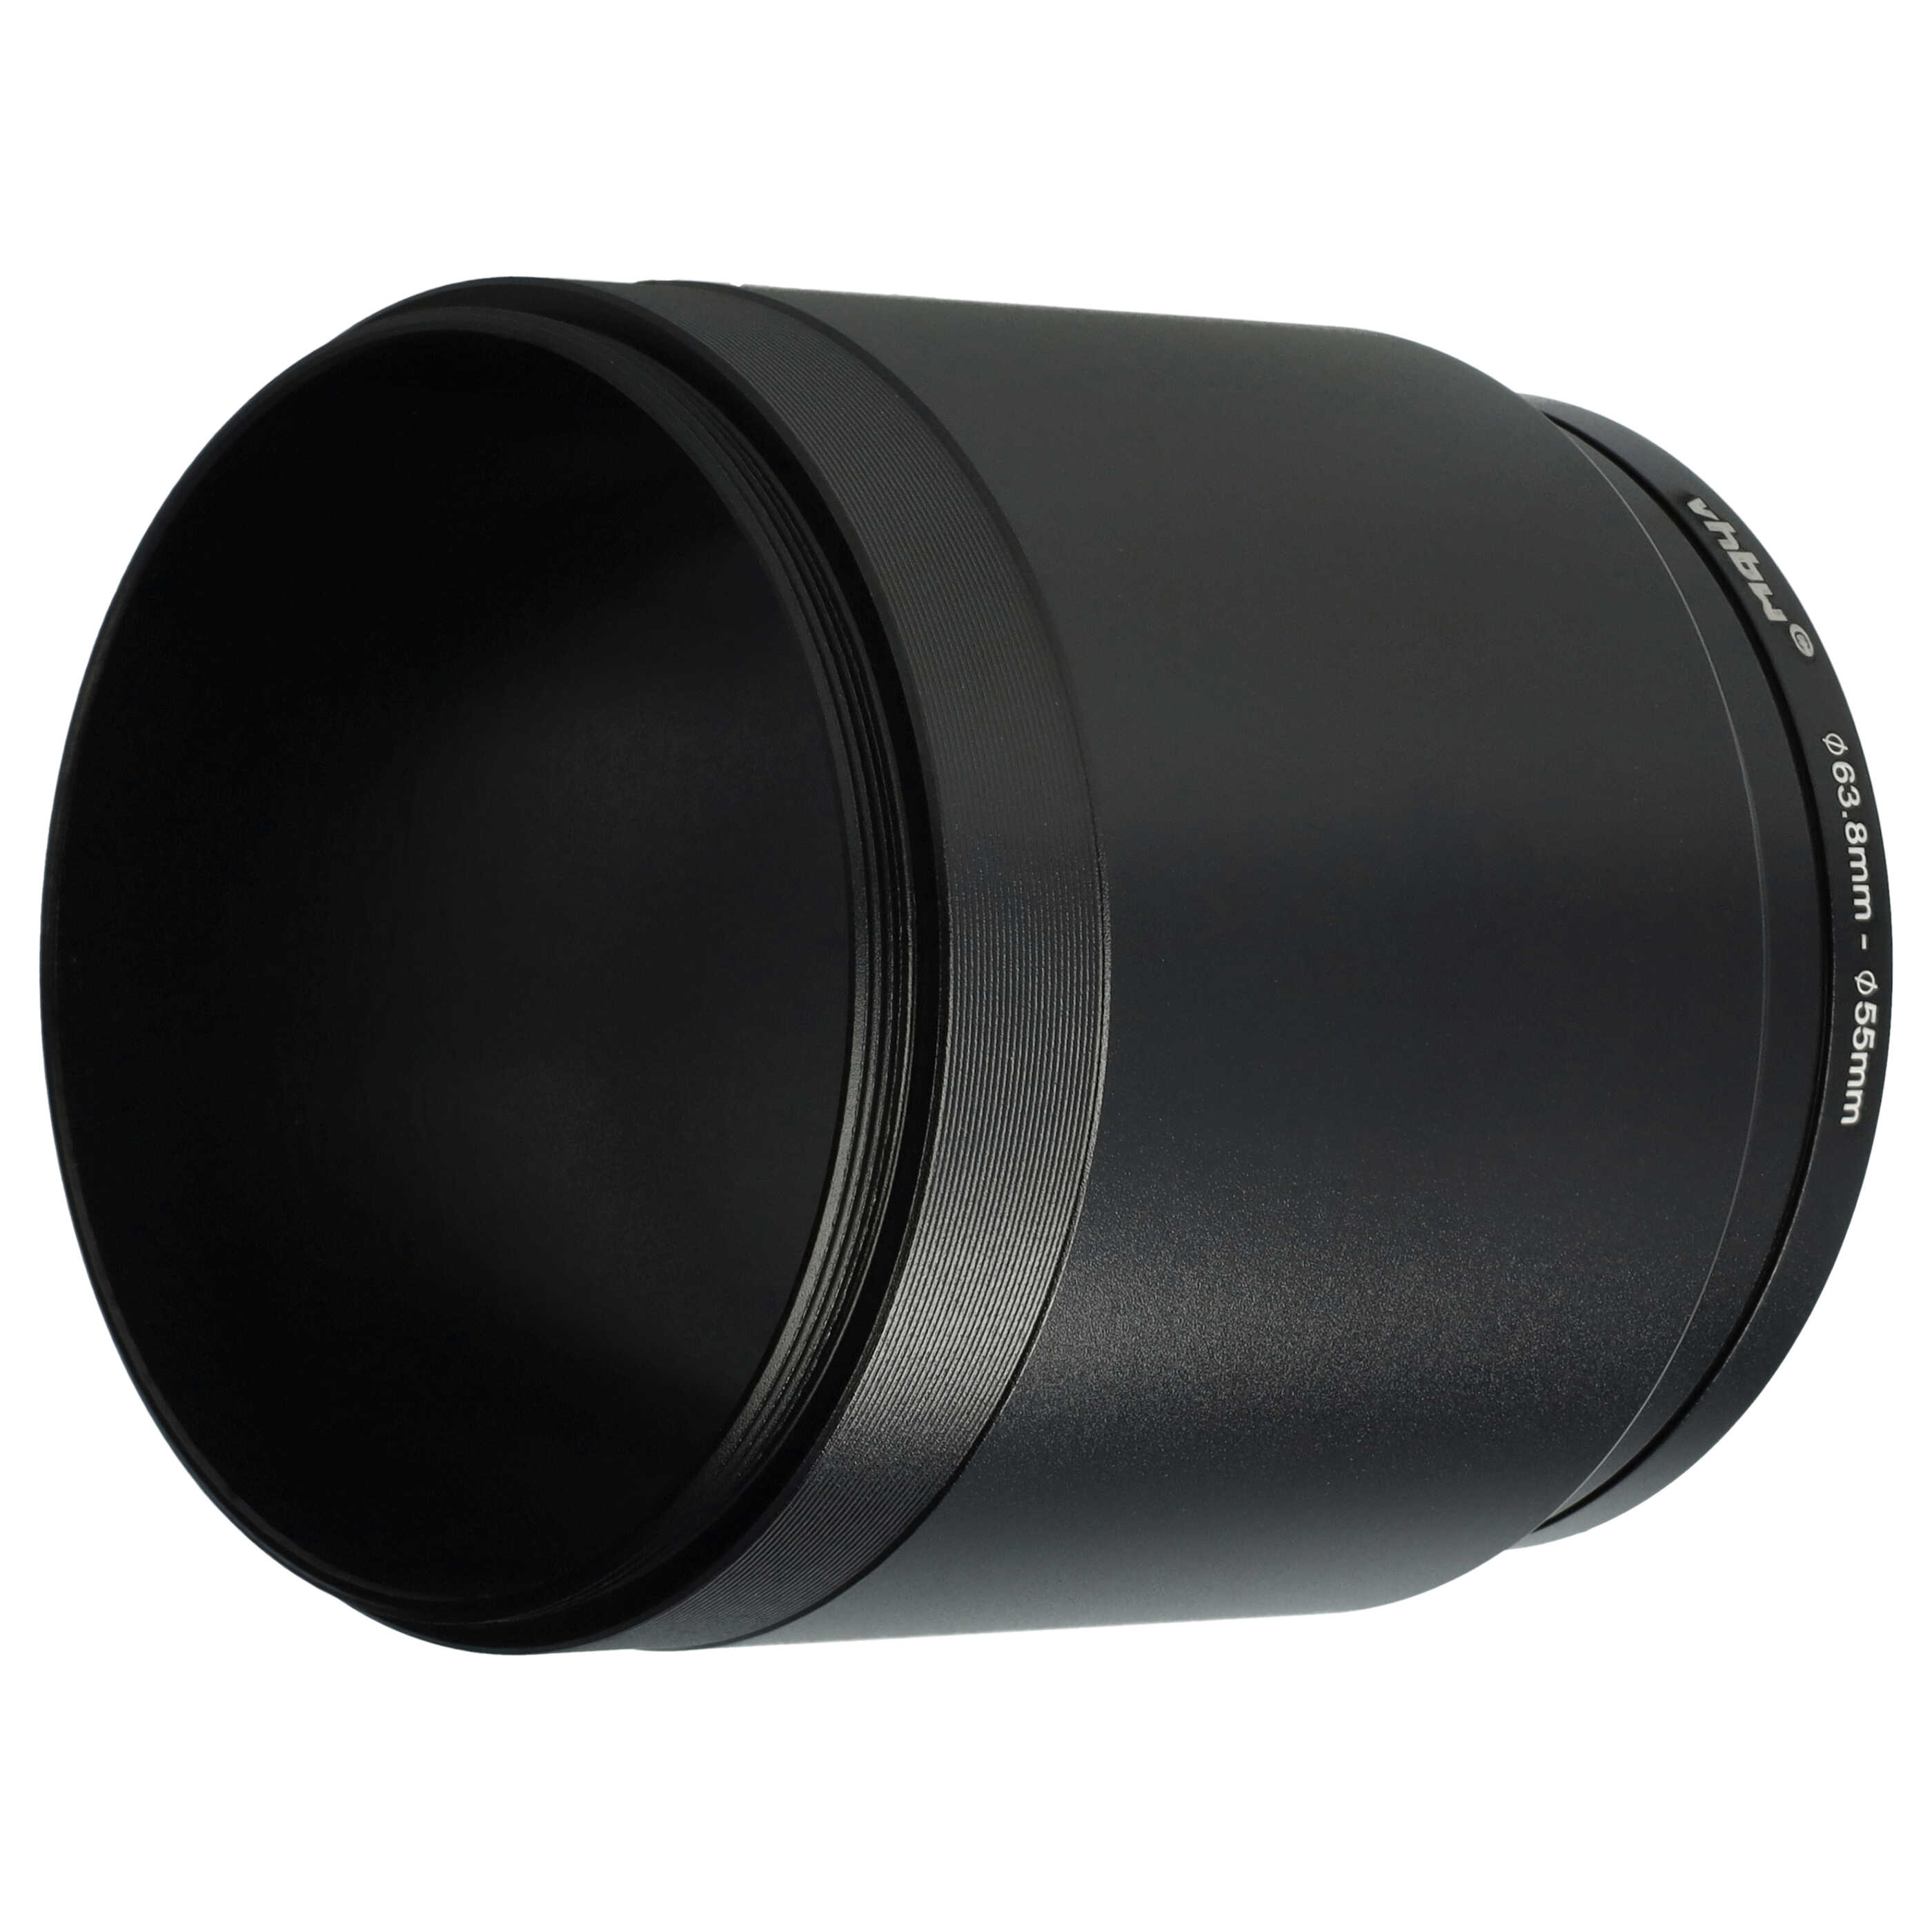 55 mm Filter Adapter suitable for Panasonic Lumix DMC-FZ300 Camera Lens